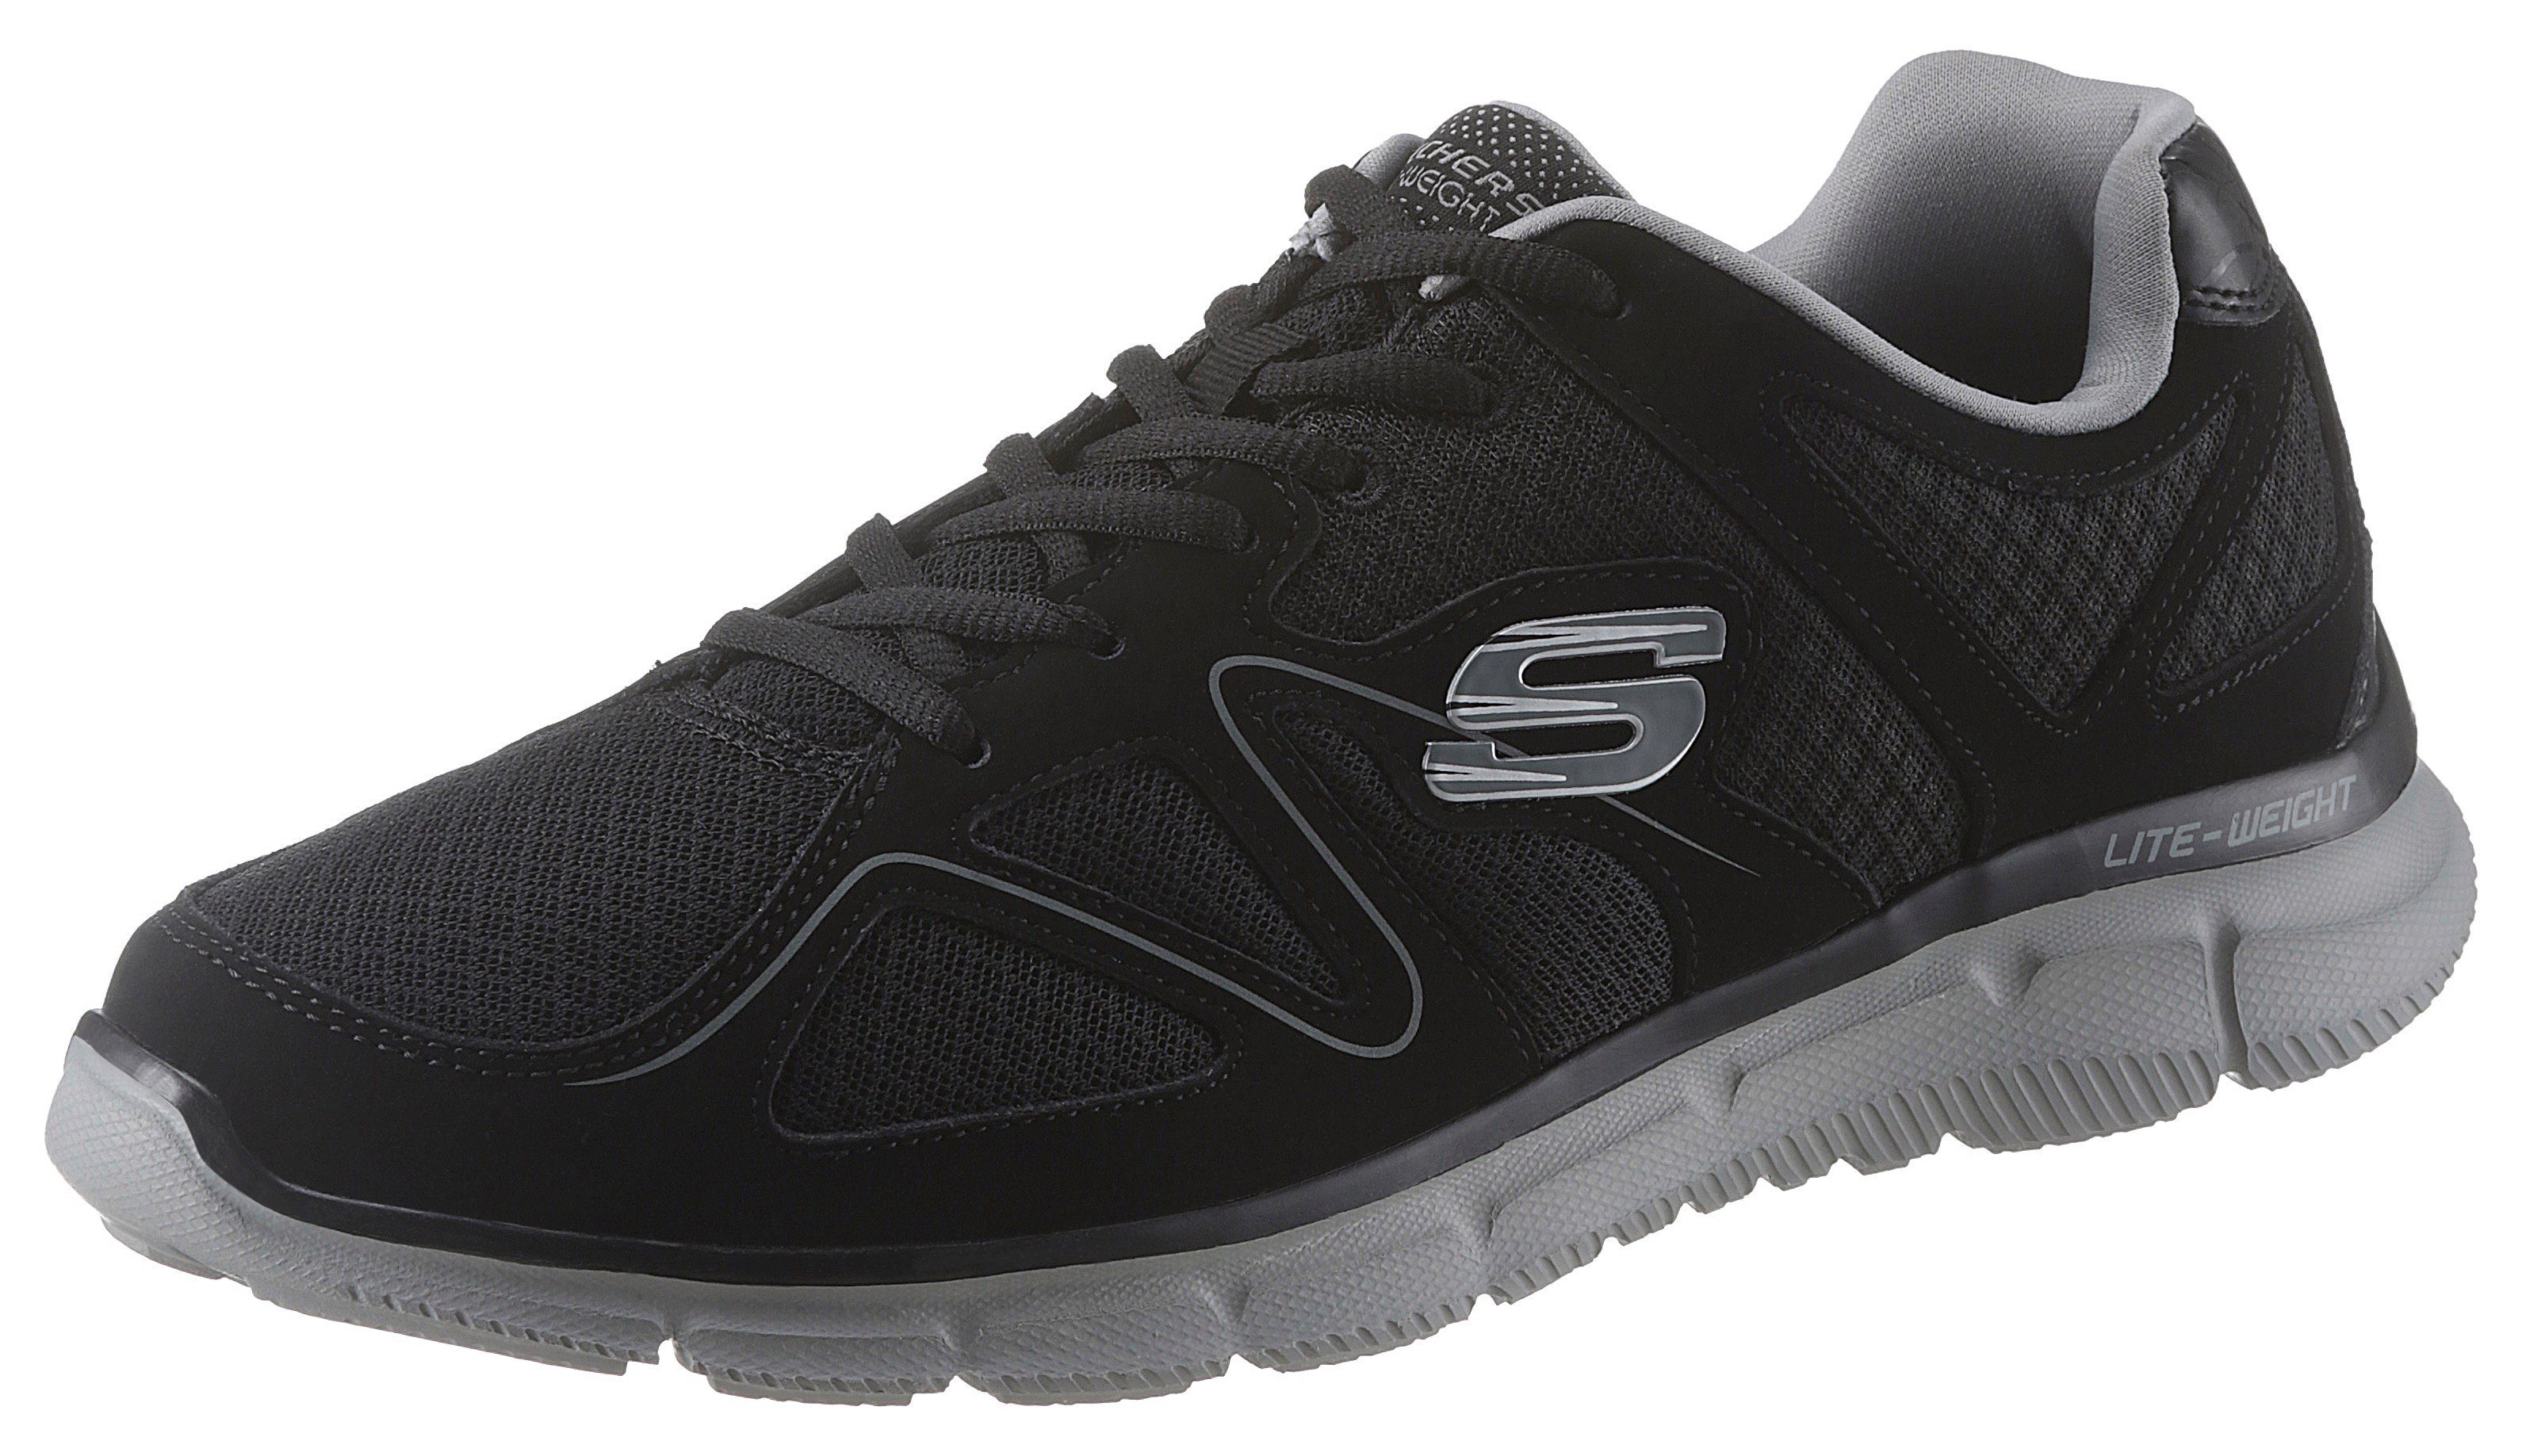 Memory Skechers Foam-Ausstattung schwarz Sneaker Verse komfortabler mit